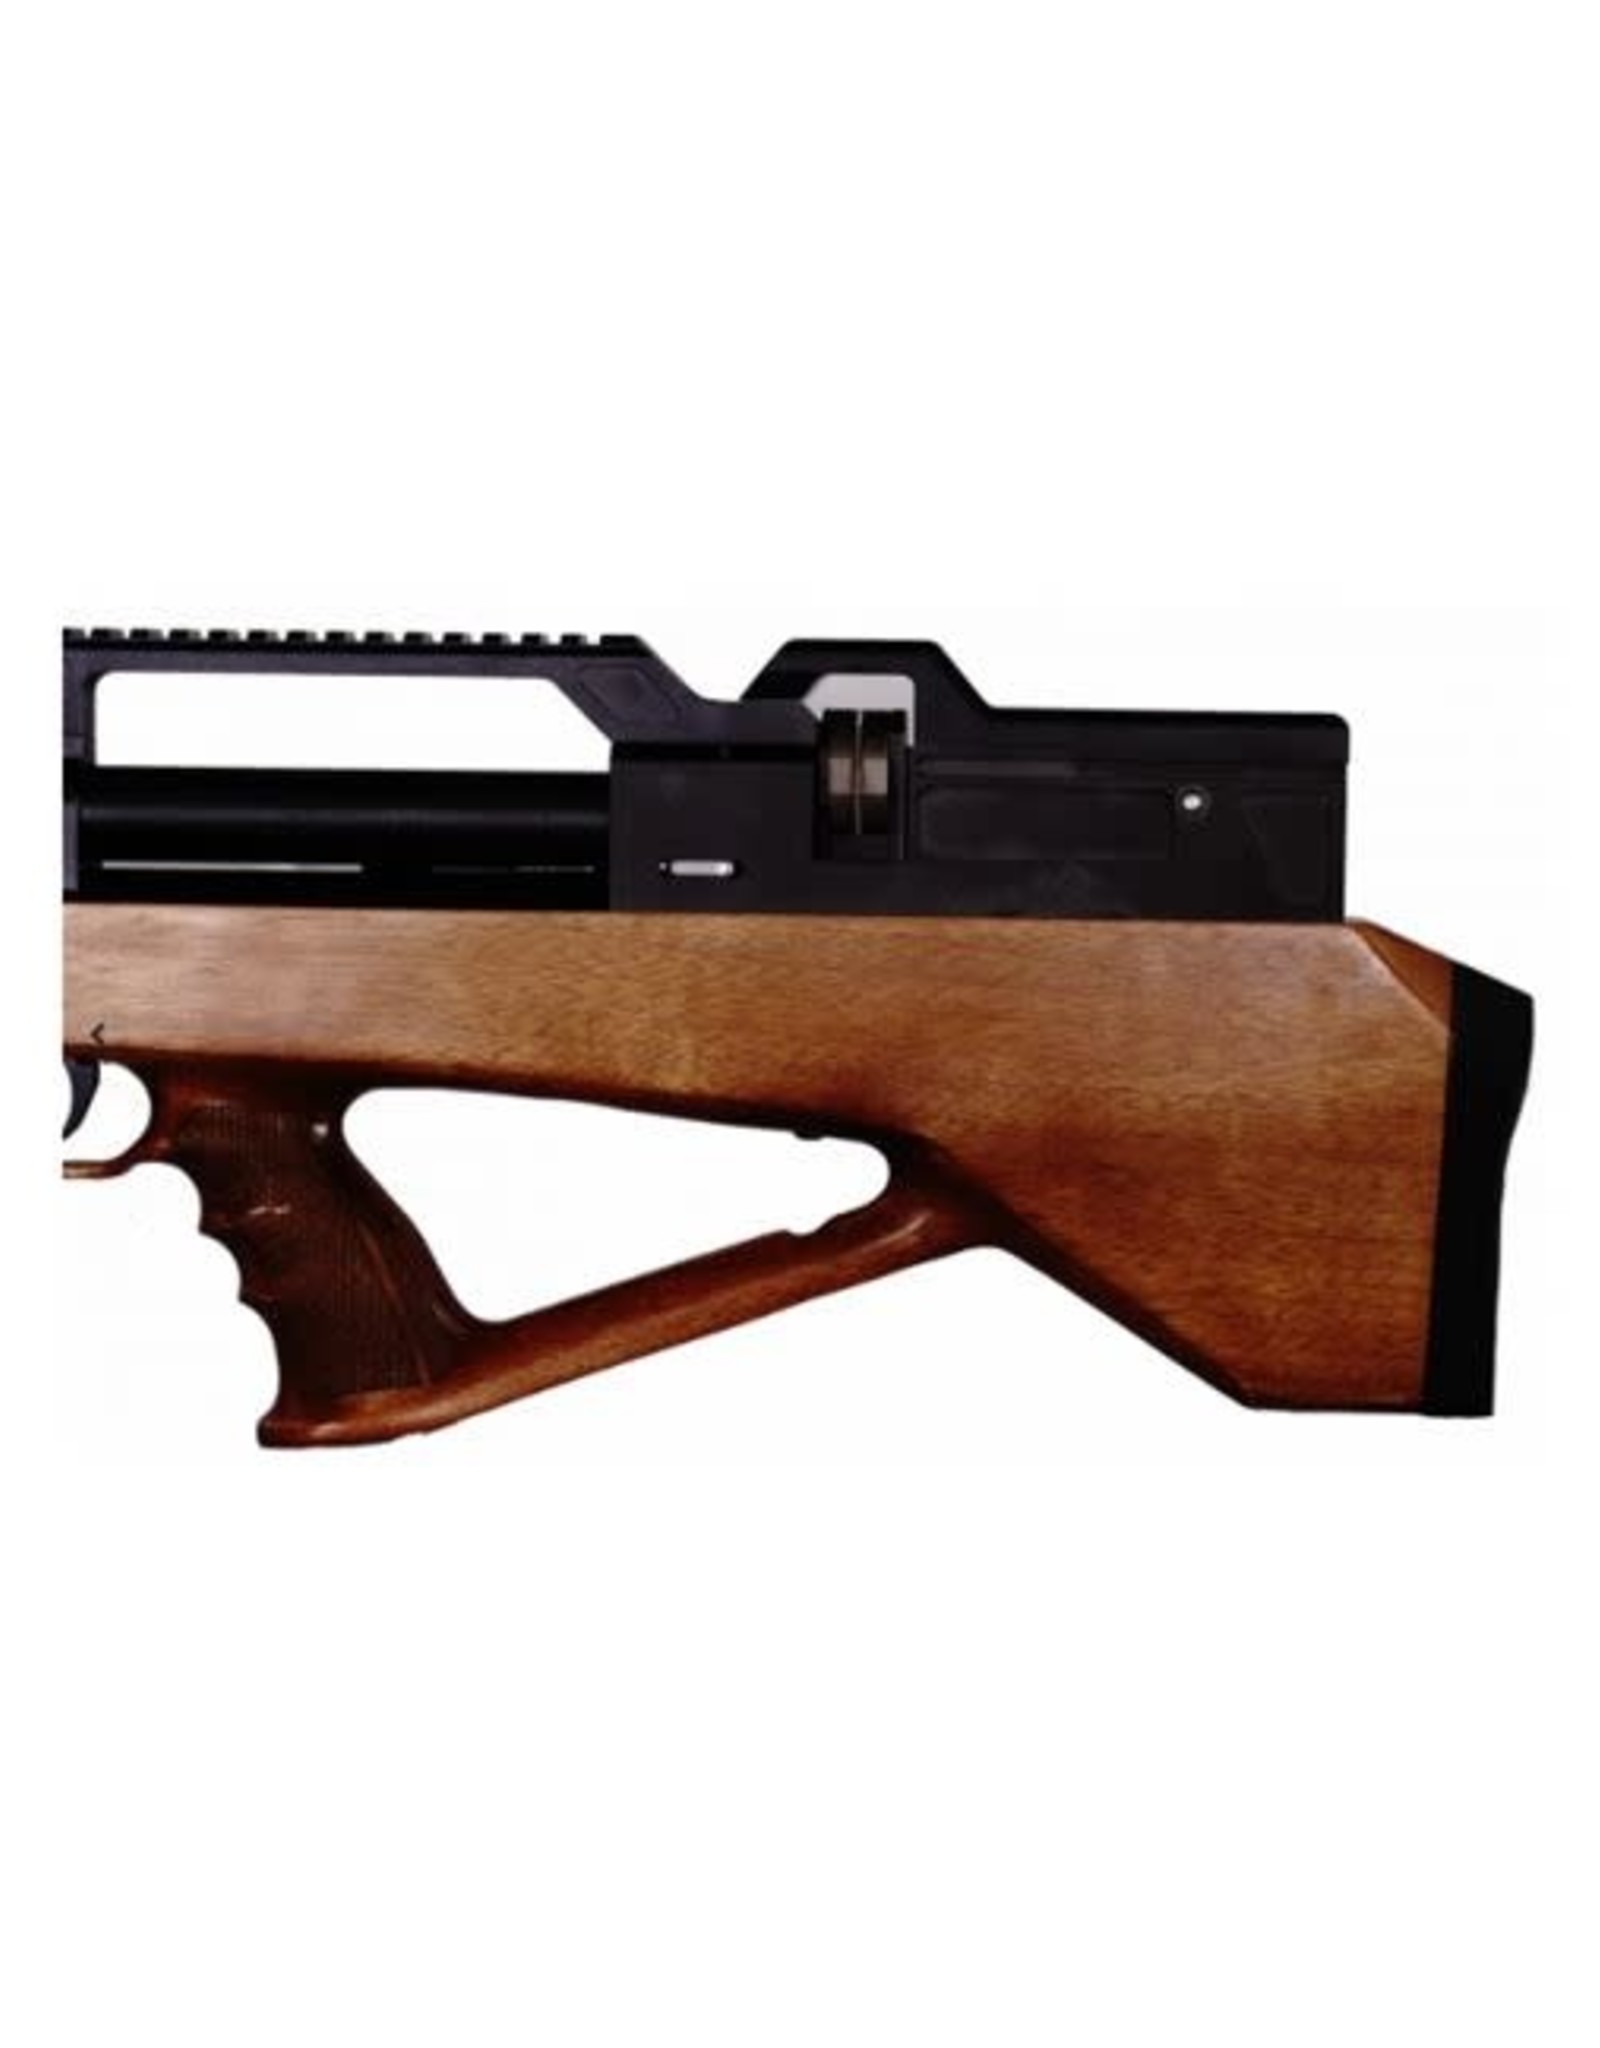 Evanix .50 (12.7mm) Cal. Evanix Max-ML PCP Sniper Air Rifle with Wood Stock